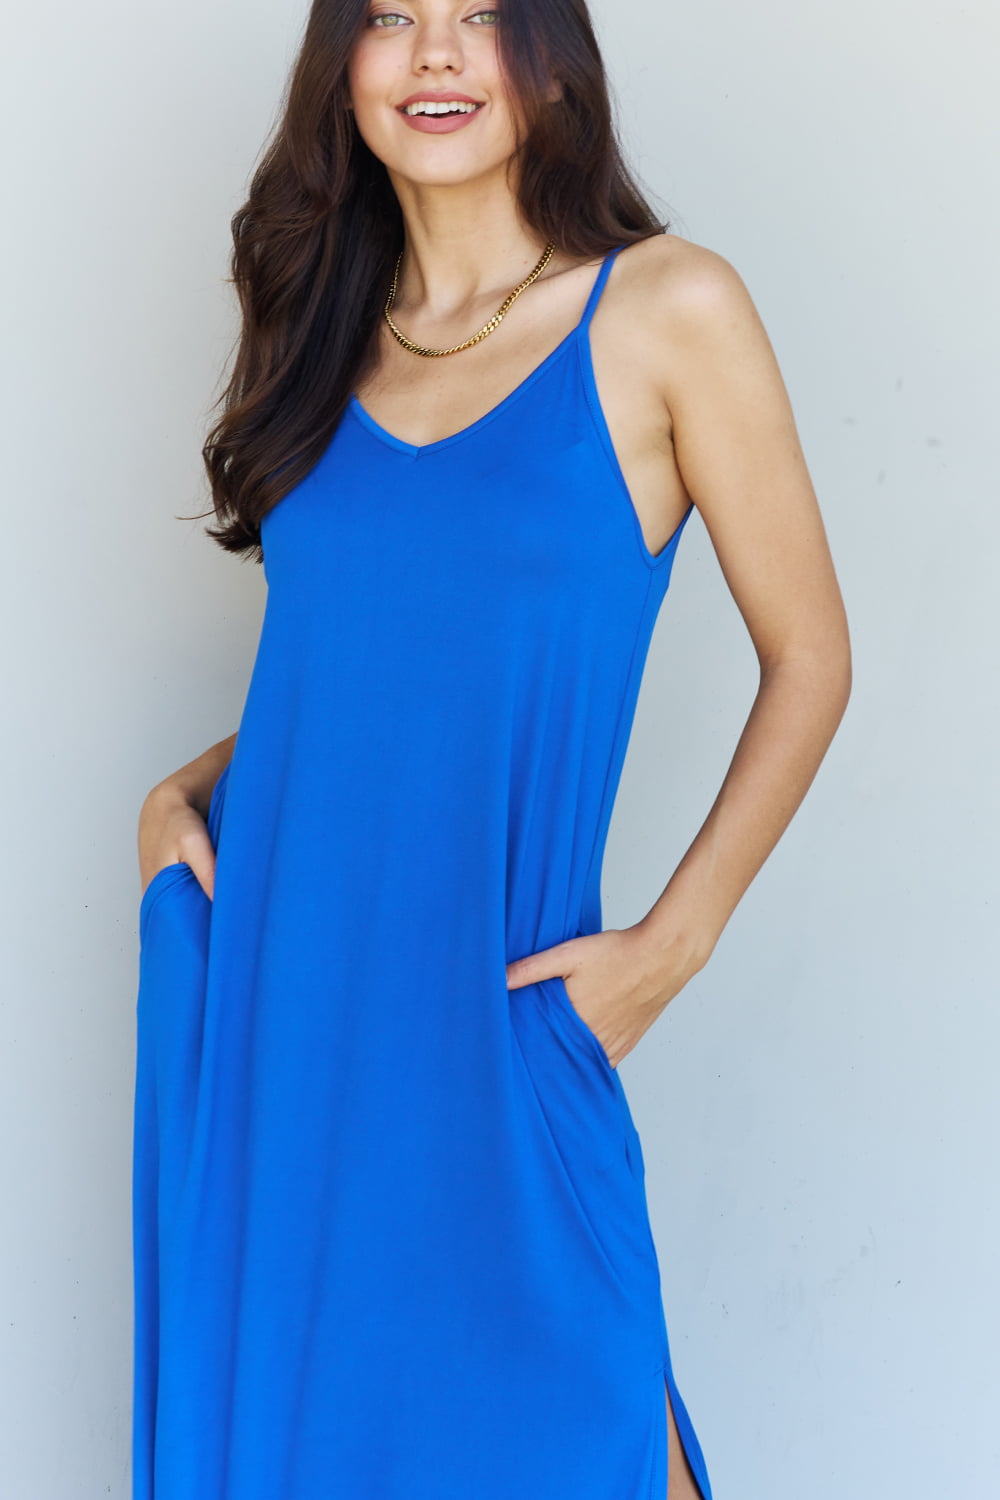 Ninexis Good Energy Cami Side Slit Maxi Dress in Royal Blue - Online Only